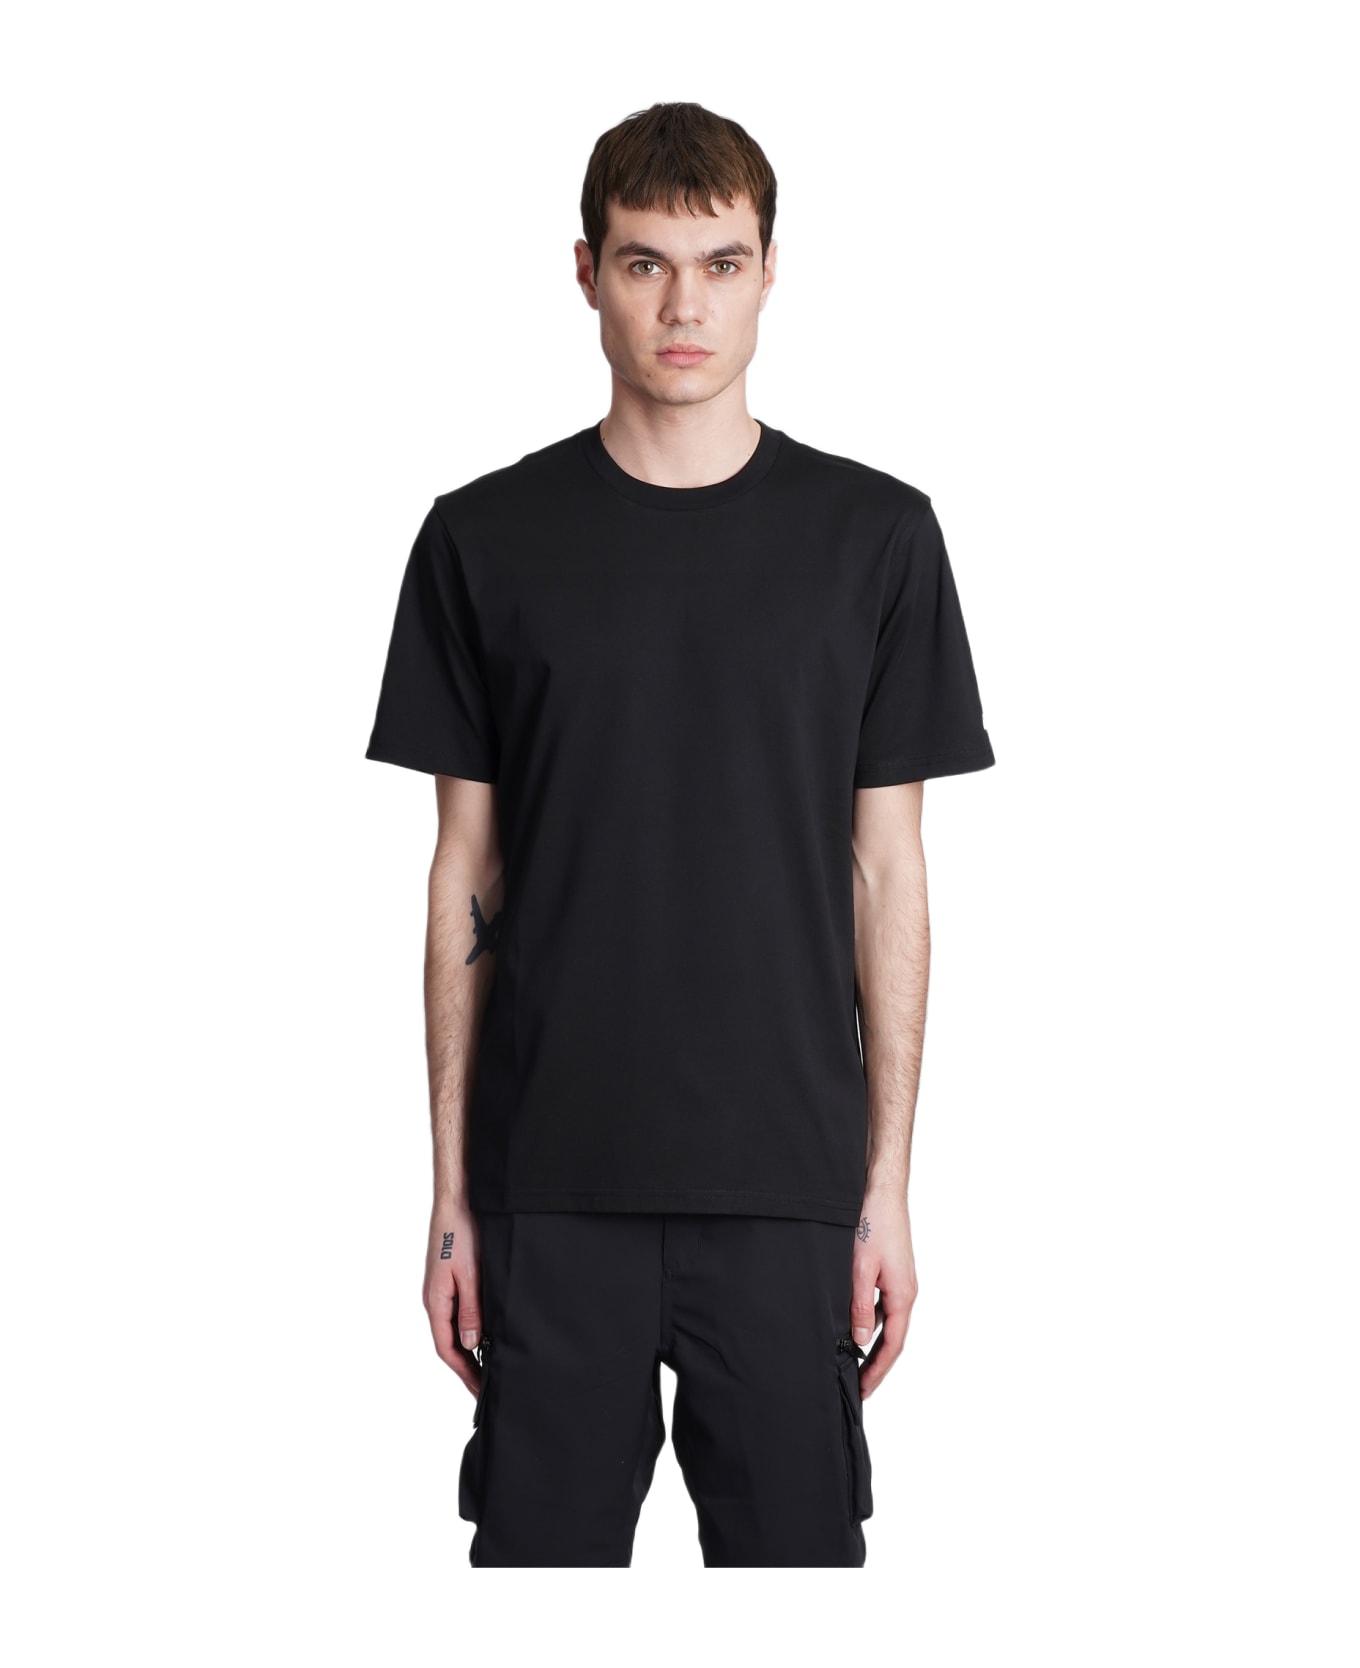 Carhartt T-shirt In Black Cotton - Black